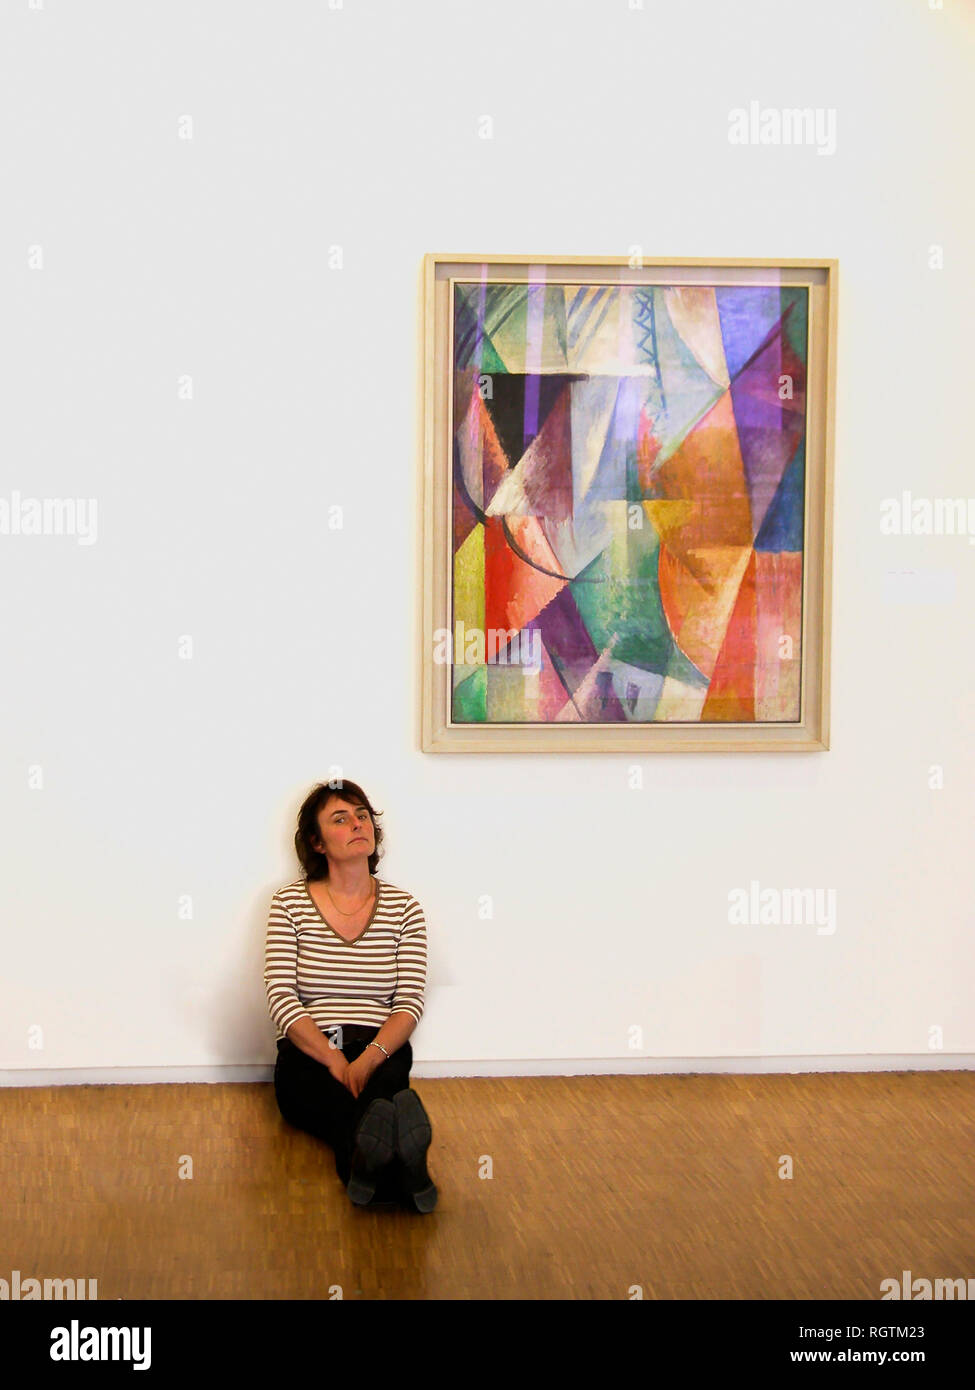 Musée d'Art Moderne, Pompidou Centre, Paris, France: lady and painting.  MODEL RELEASED Stock Photo